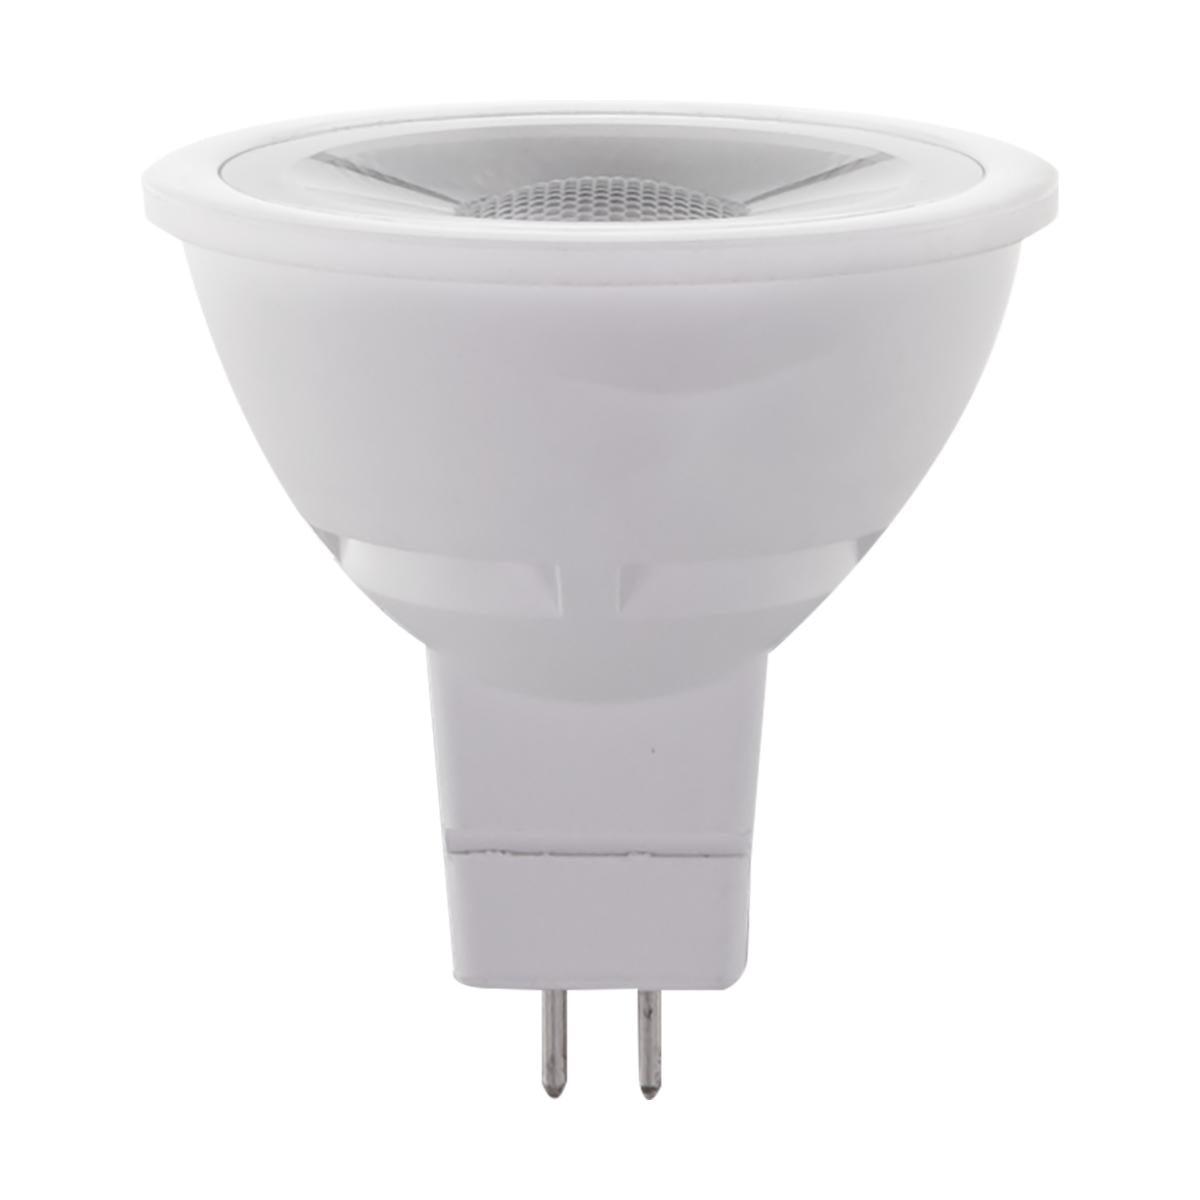 LED MR16 Reflector Bulb, 7 Watt, 600 Lumens, 3000K, GU5.3 Base, Frosted Finish, Pack Of 2 - Bees Lighting